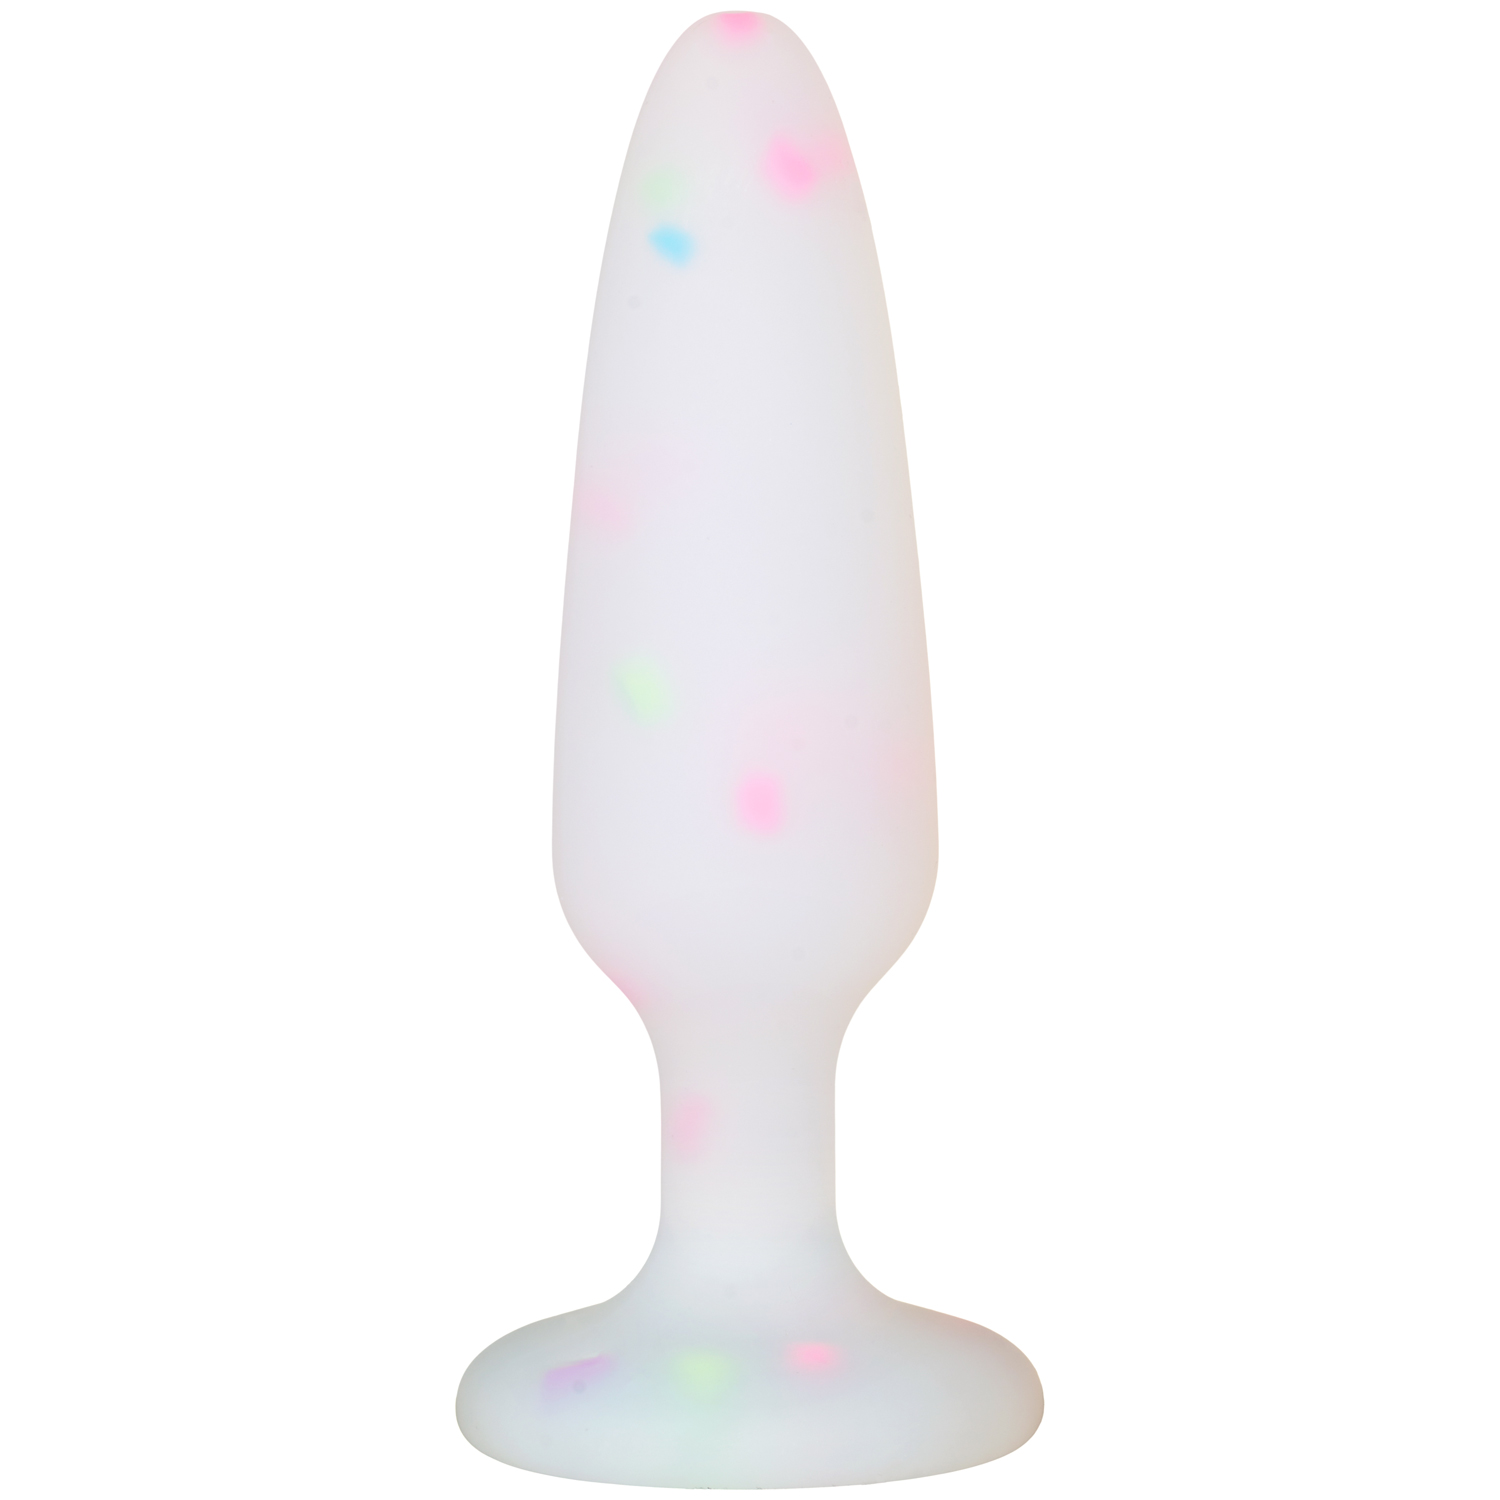 Sinful Confetti Medium Butt Plug 11 cm - Mixed colours